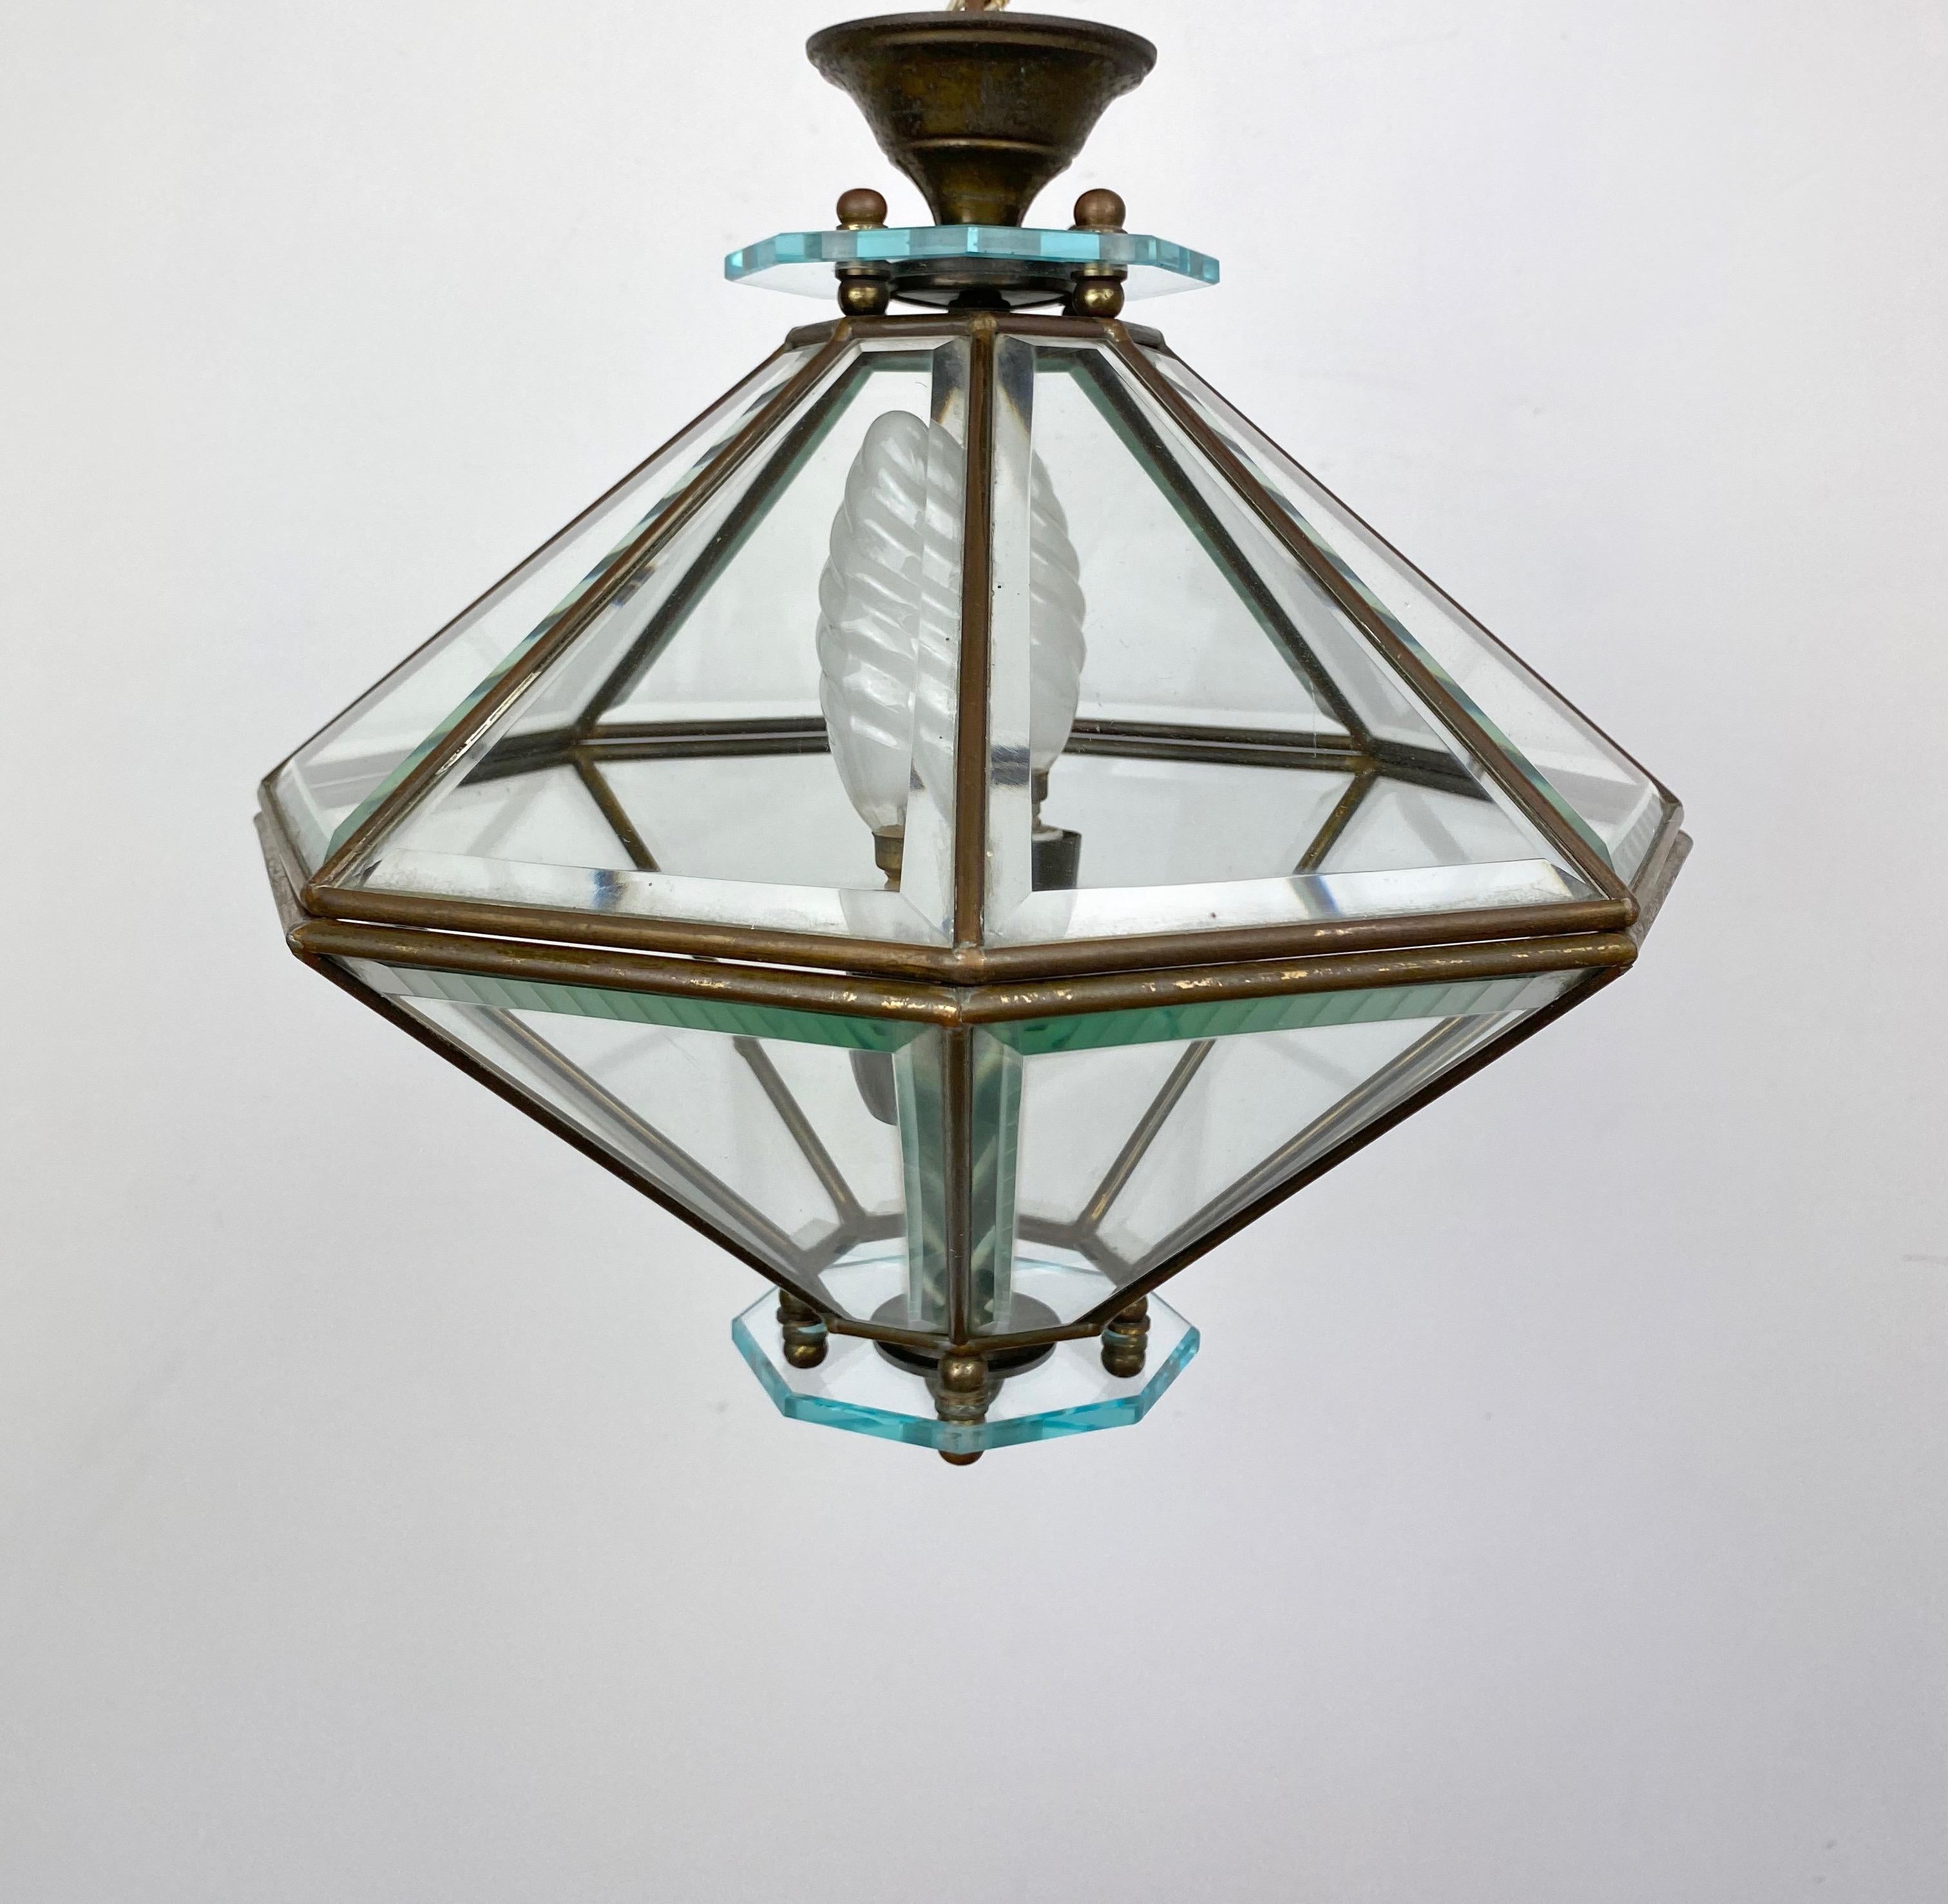 Octagonal Diamond Chandelier Lantern Brass and Glass Fontana Arte, Italy, 1950s For Sale 1